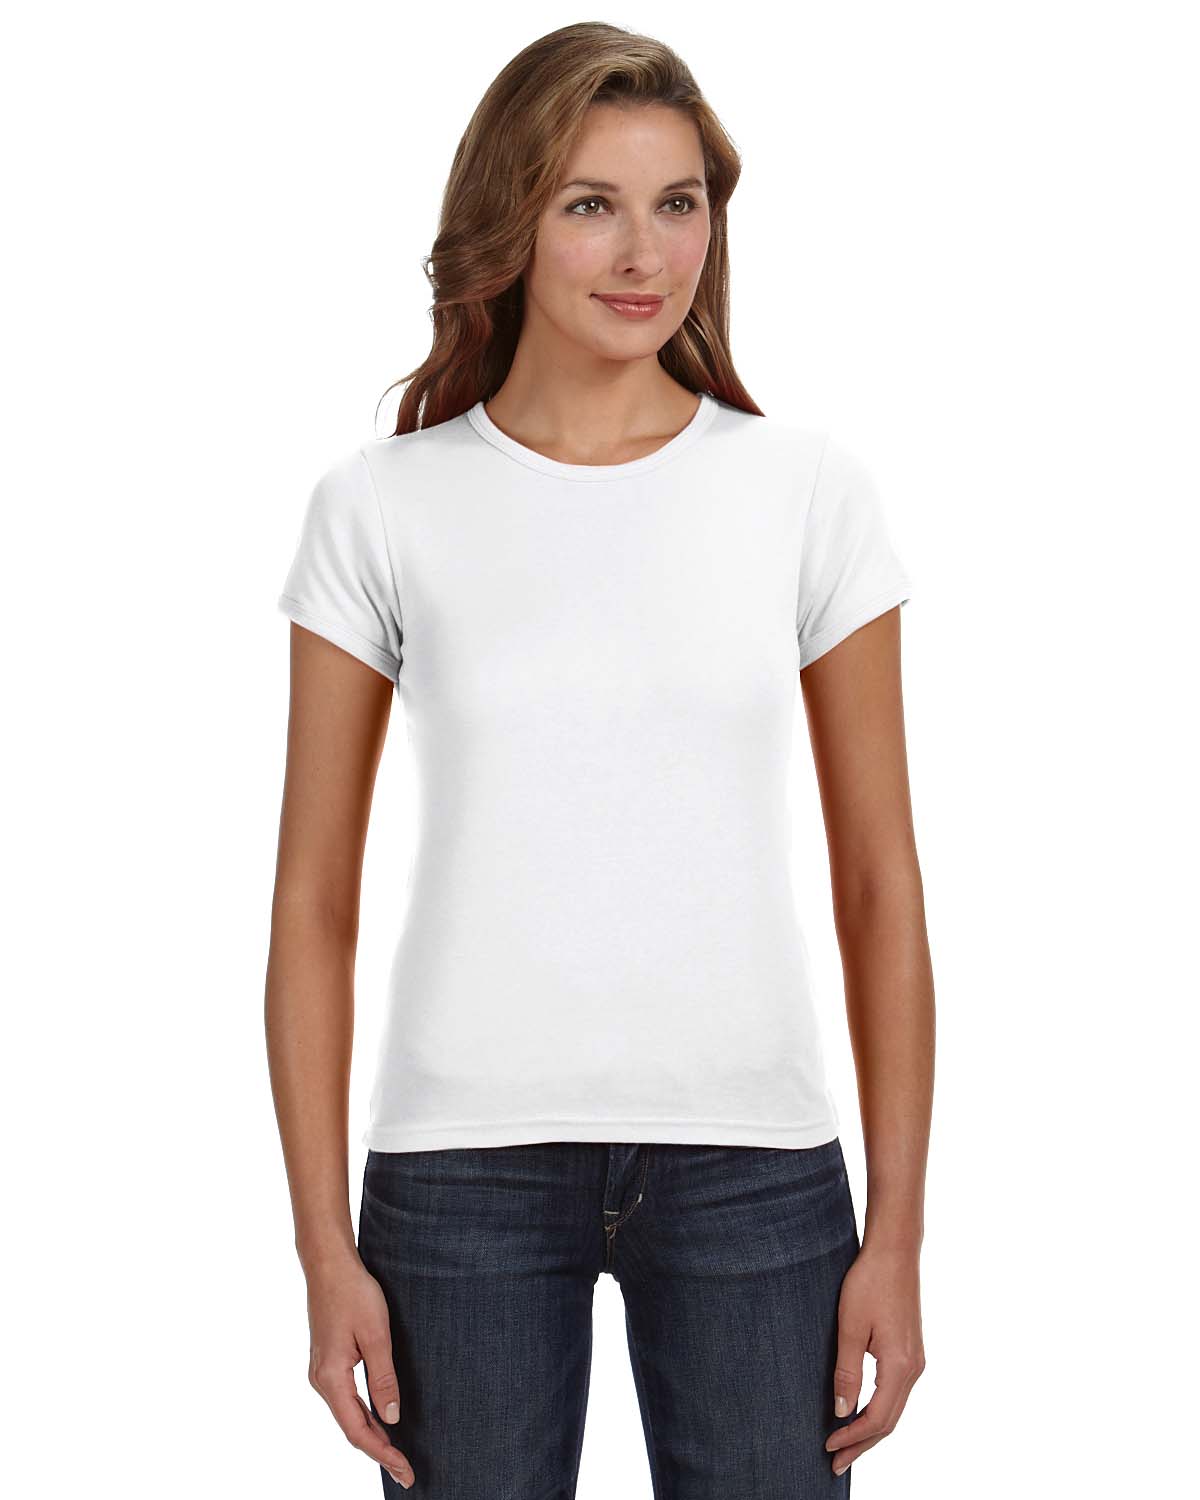 Anvil 1441 Women's 1x1 Rib Scoop Neck T-Shirt - Shirtmax